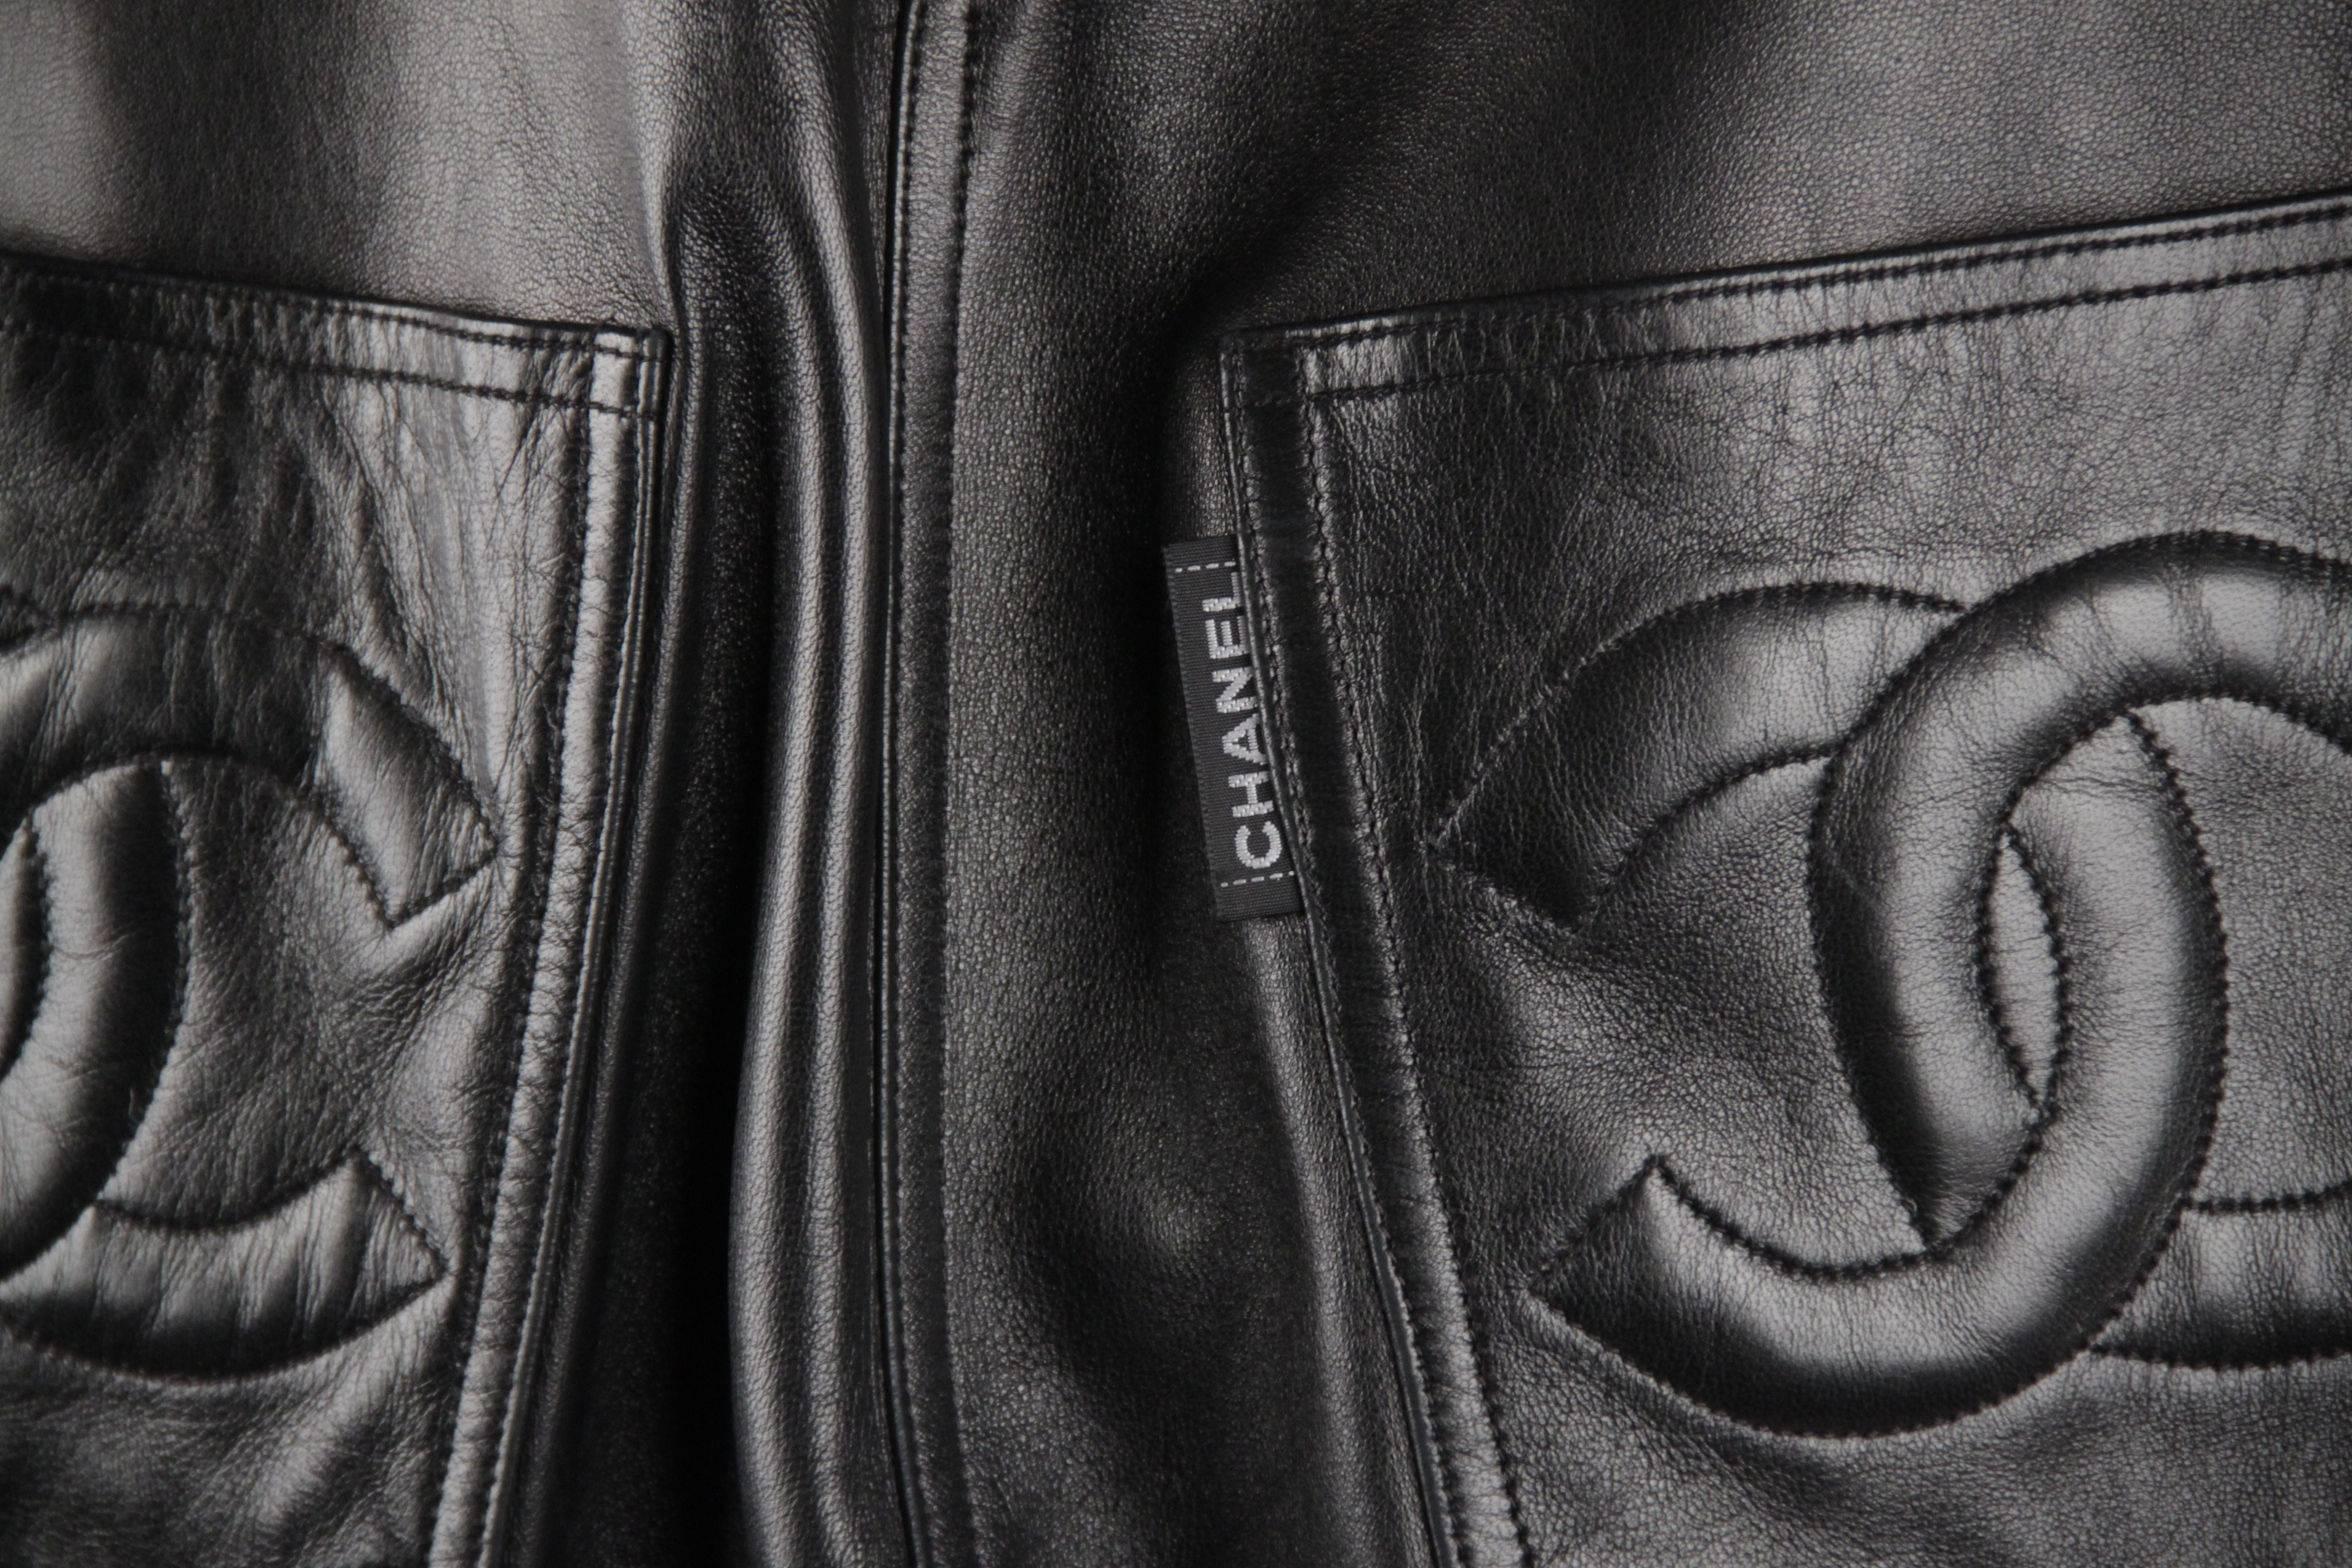 Women's CHANEL BOUTIQUE Black Leather BIKER PANTS Trousers w/ ANKLE ZIP